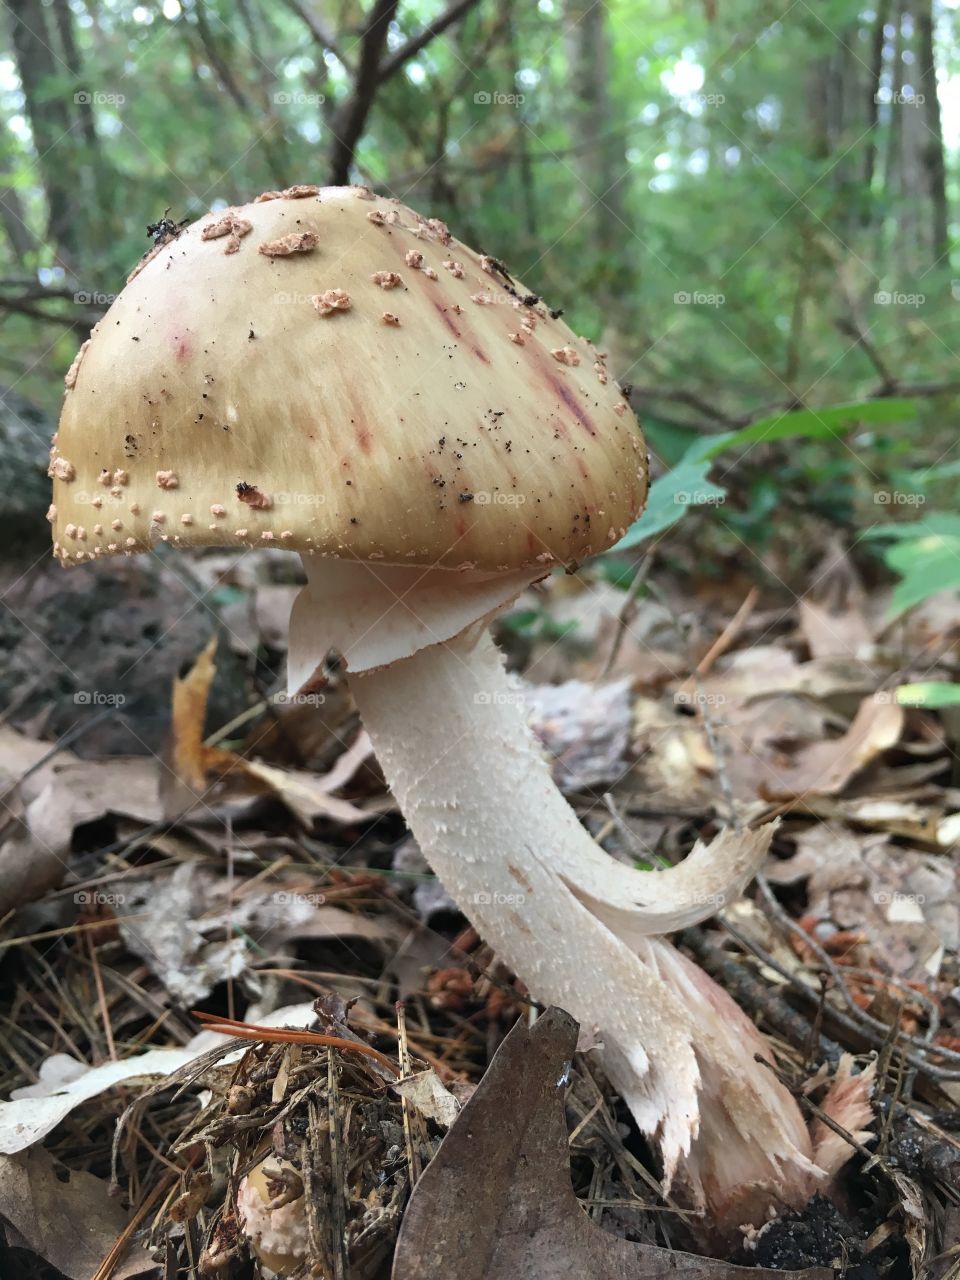 Magnificent Mushroom!